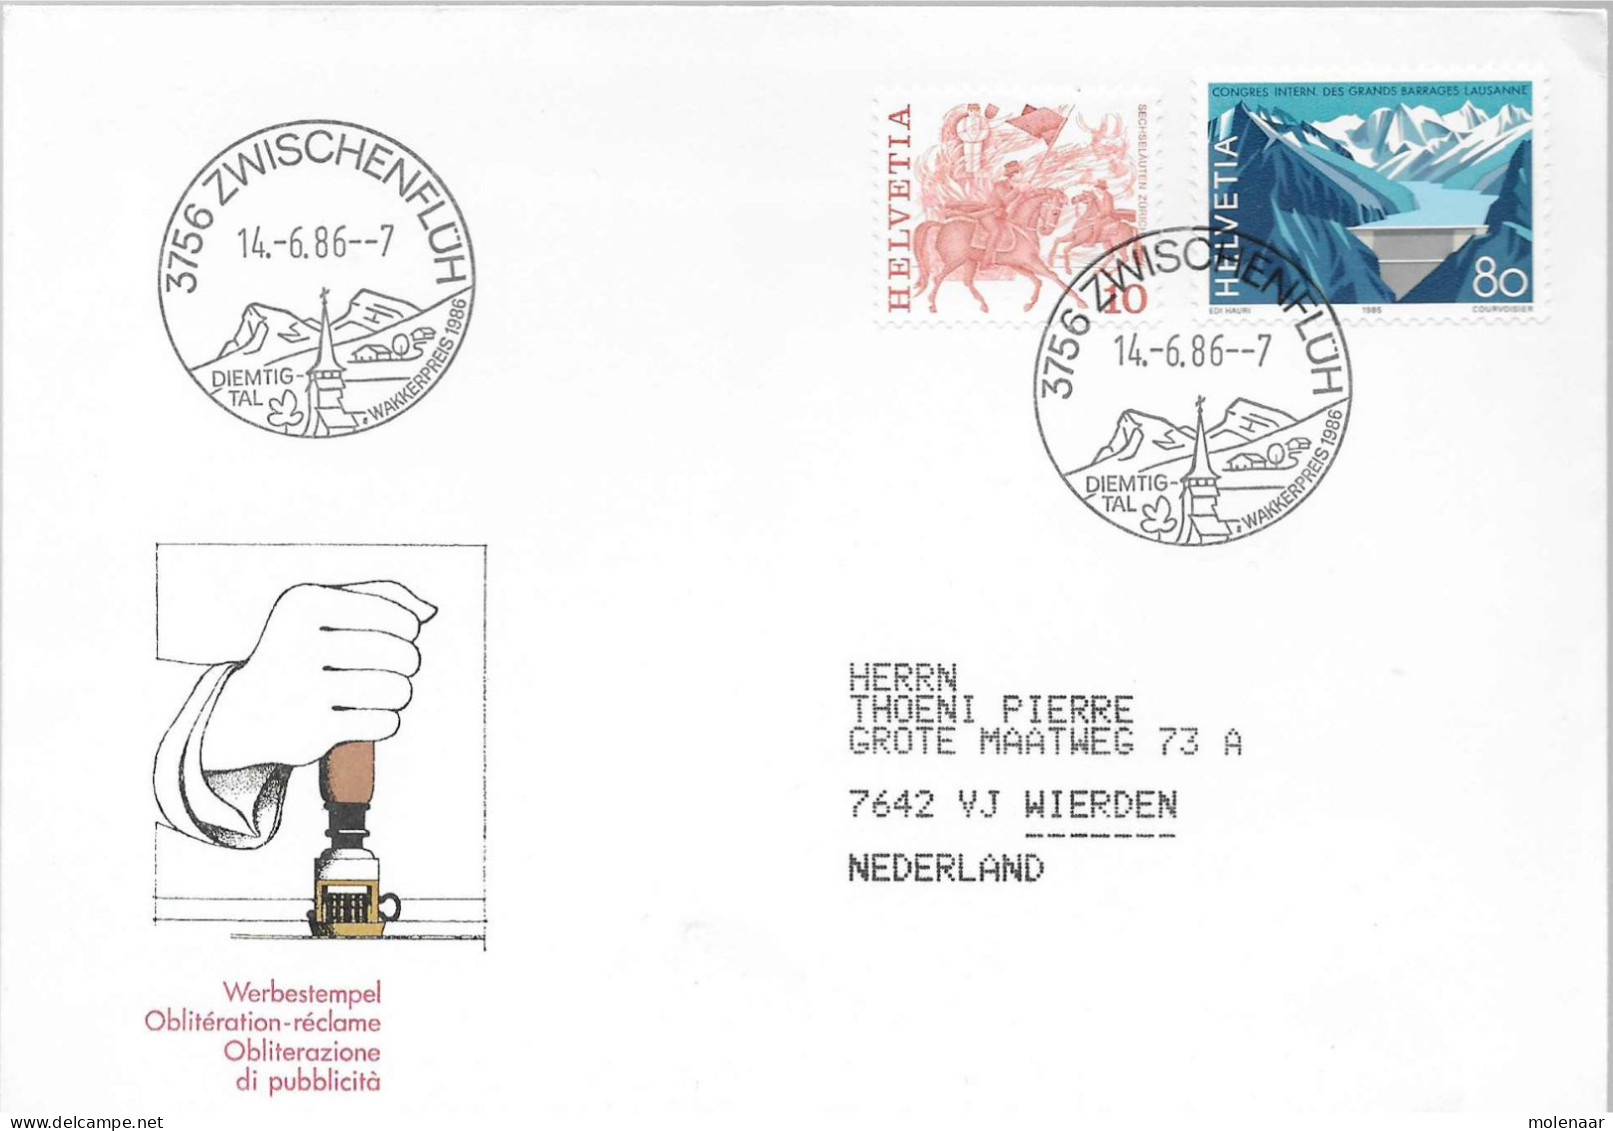 Postzegels > Europa > Zwitserland > 1980-1989 > Brief Met No. 1287 (17617) - Storia Postale